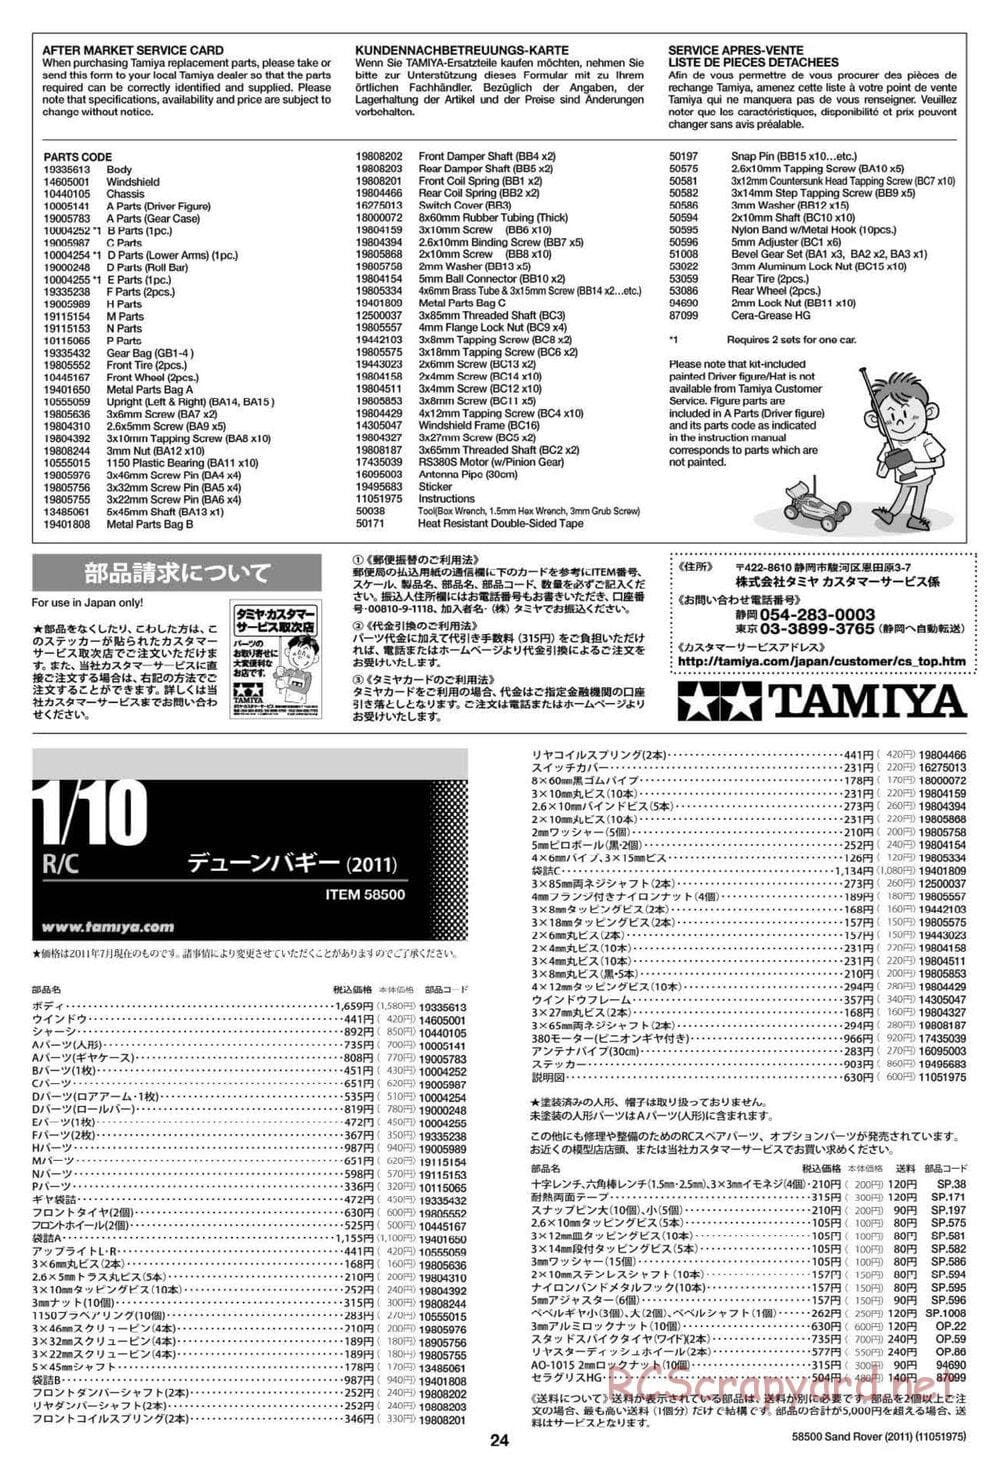 Tamiya - Sand Rover 2011 Chassis - Manual - Page 24